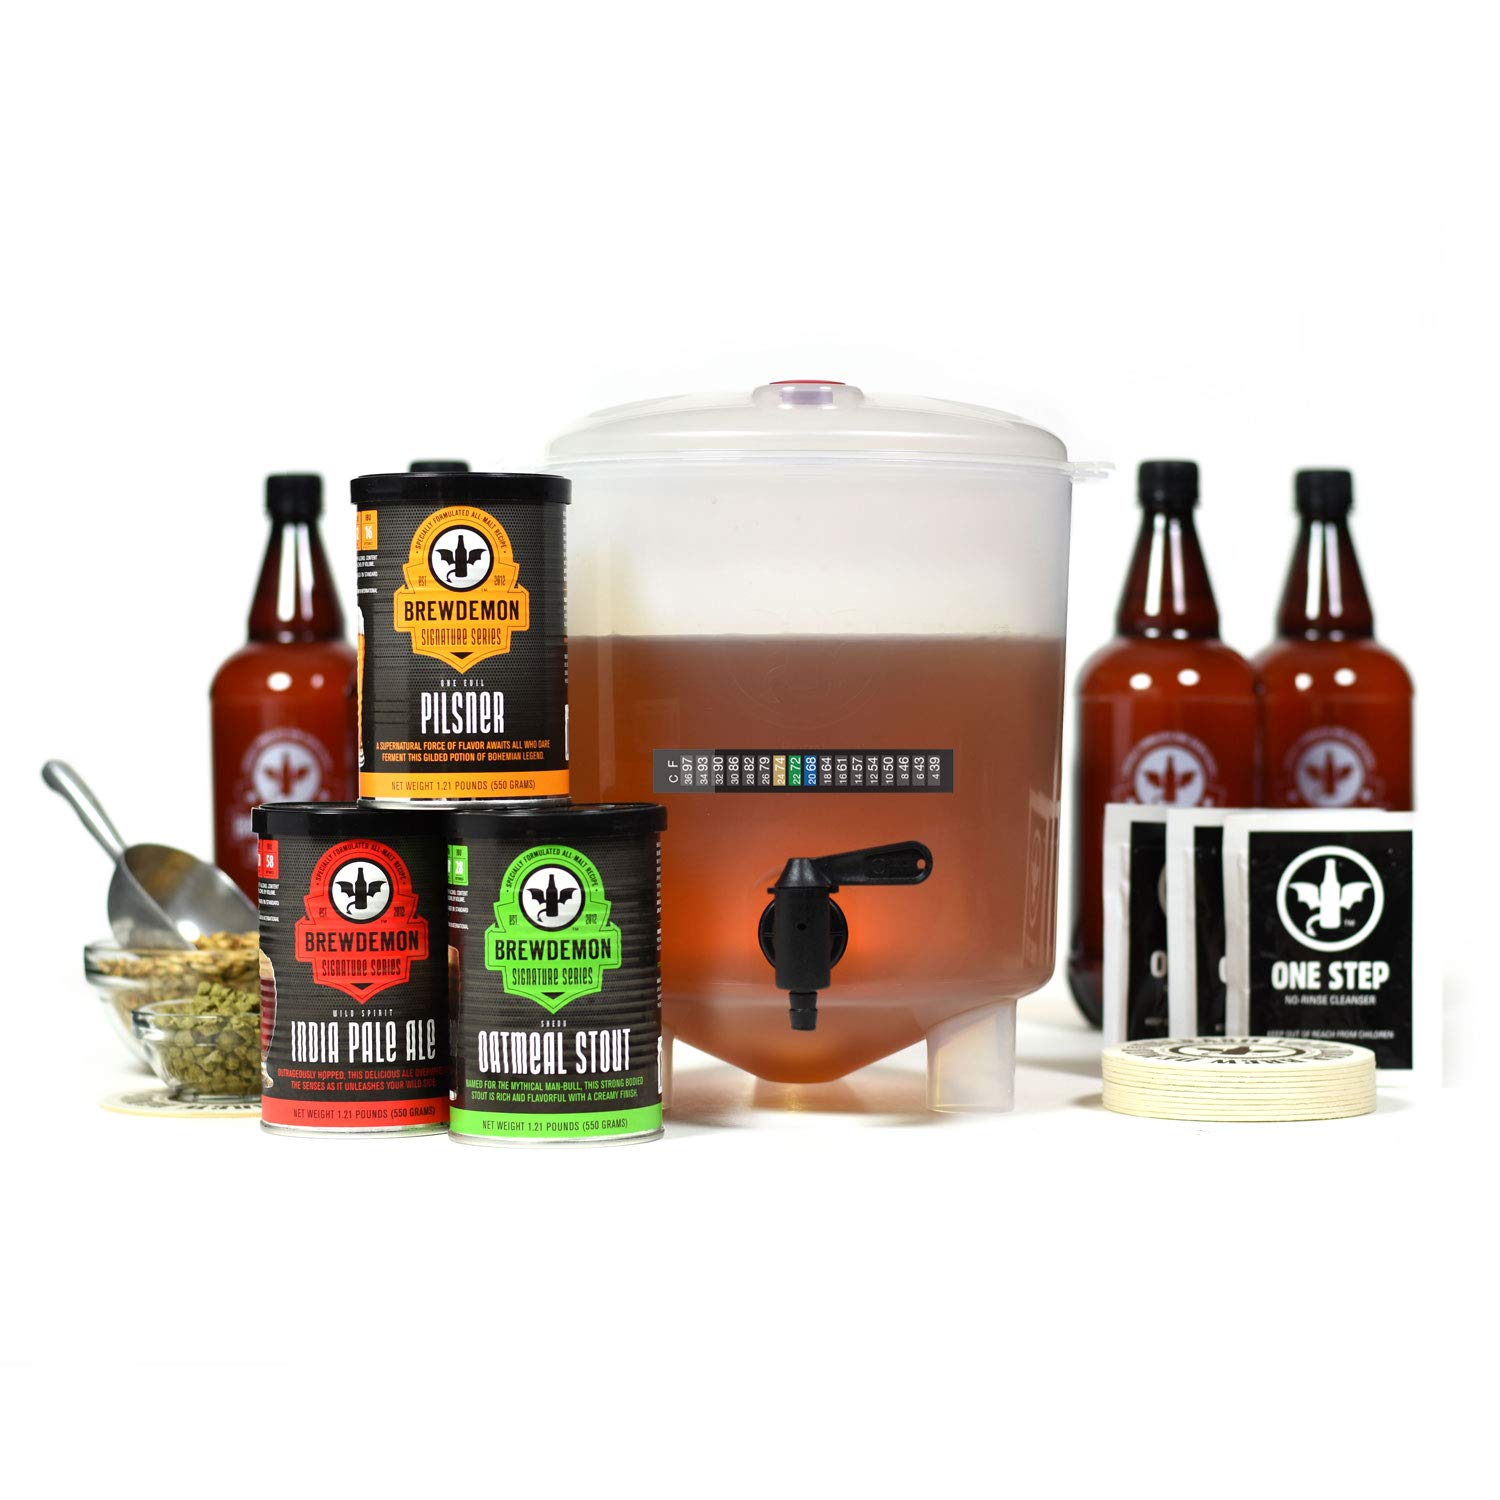 BrewDemon Craft Beer Kit with Bottles